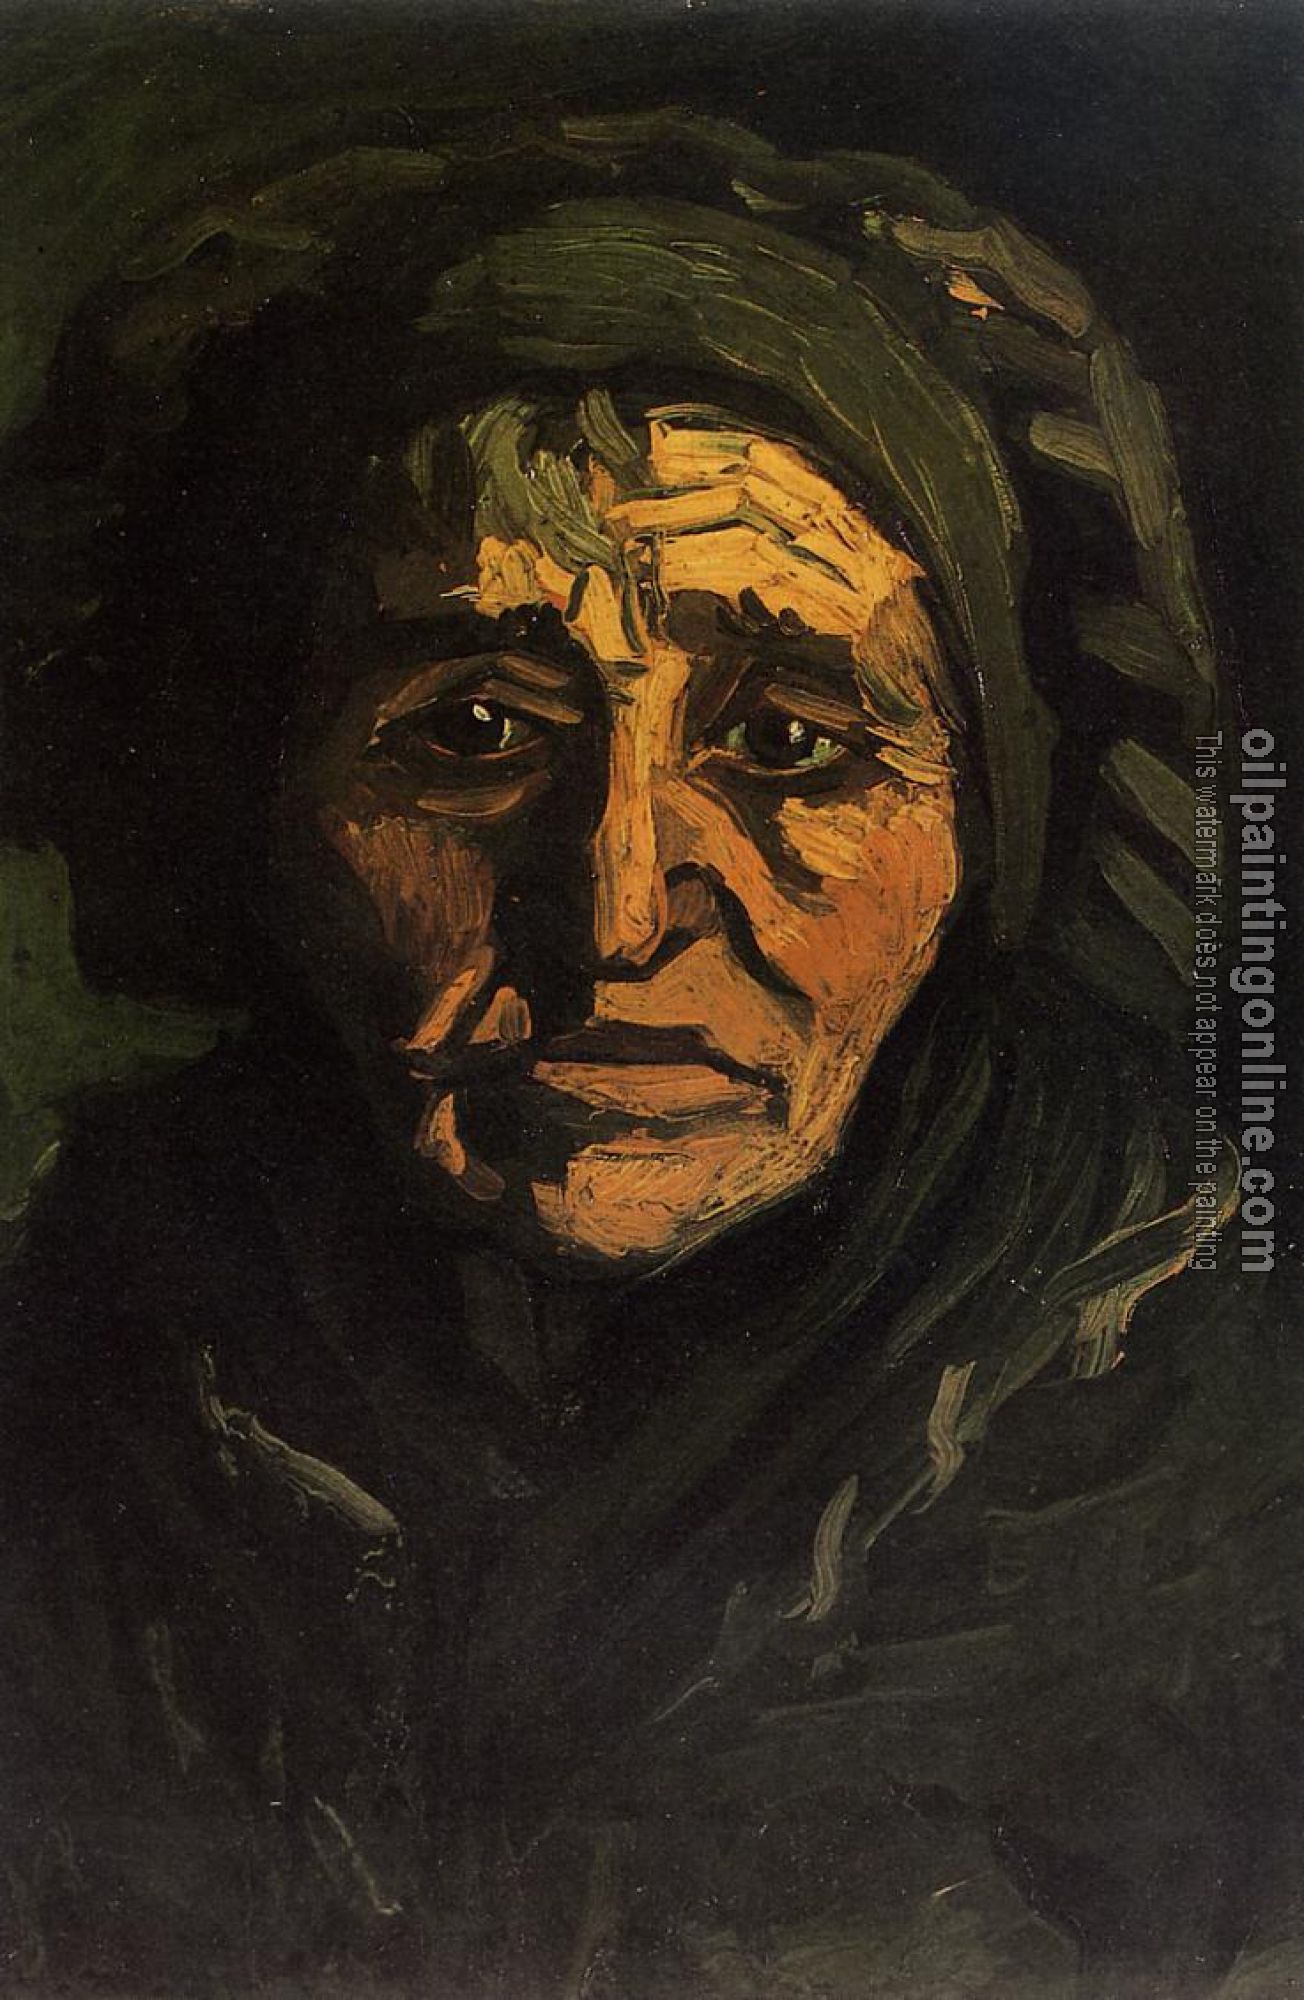 Gogh, Vincent van - Head of a Peasant Woman with Greenish Lace Cap